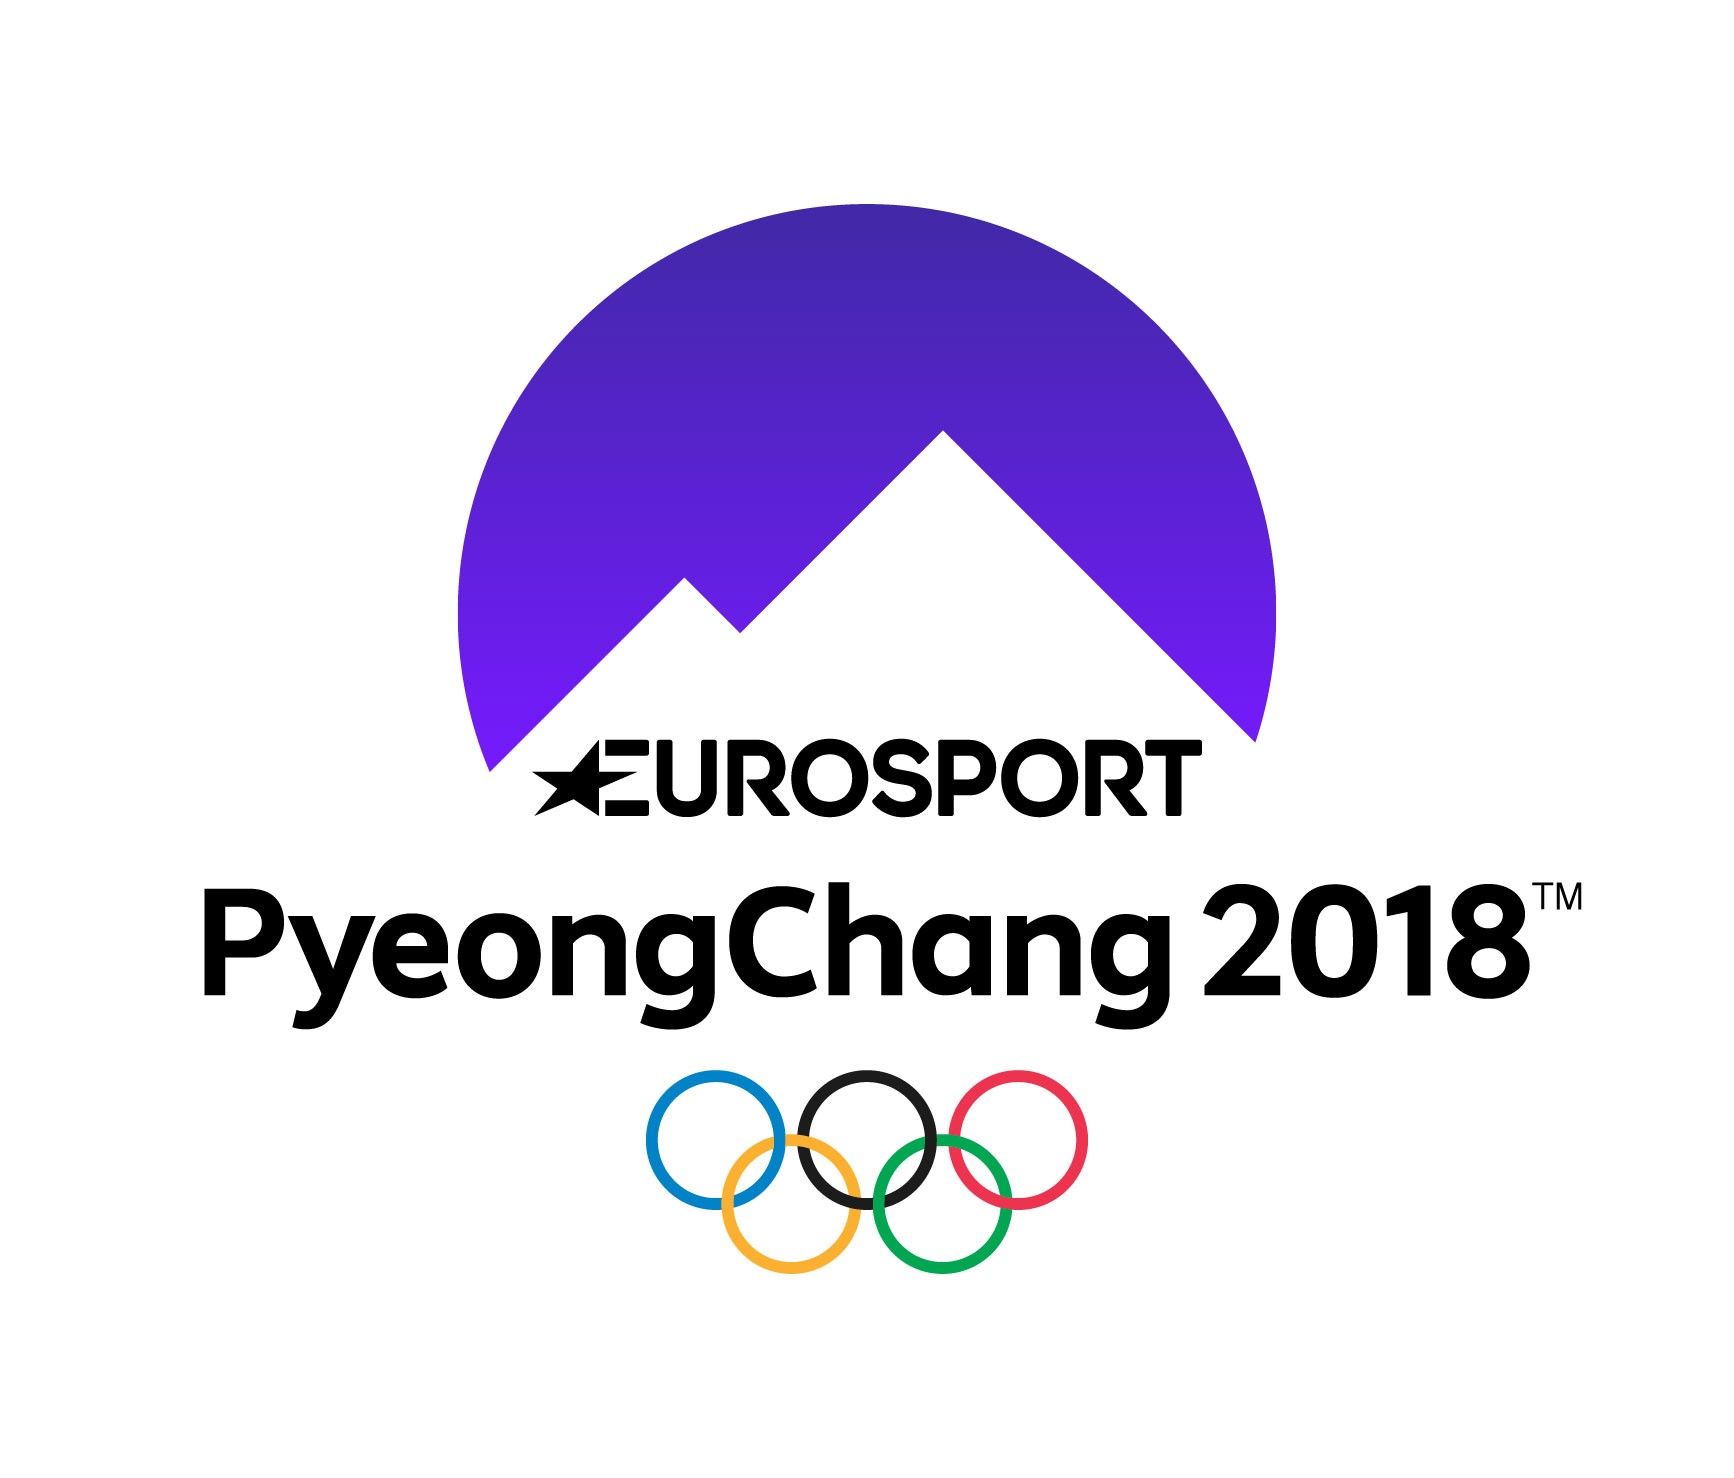 Eurosport reveals bespoke brand identity for PyeongChang.